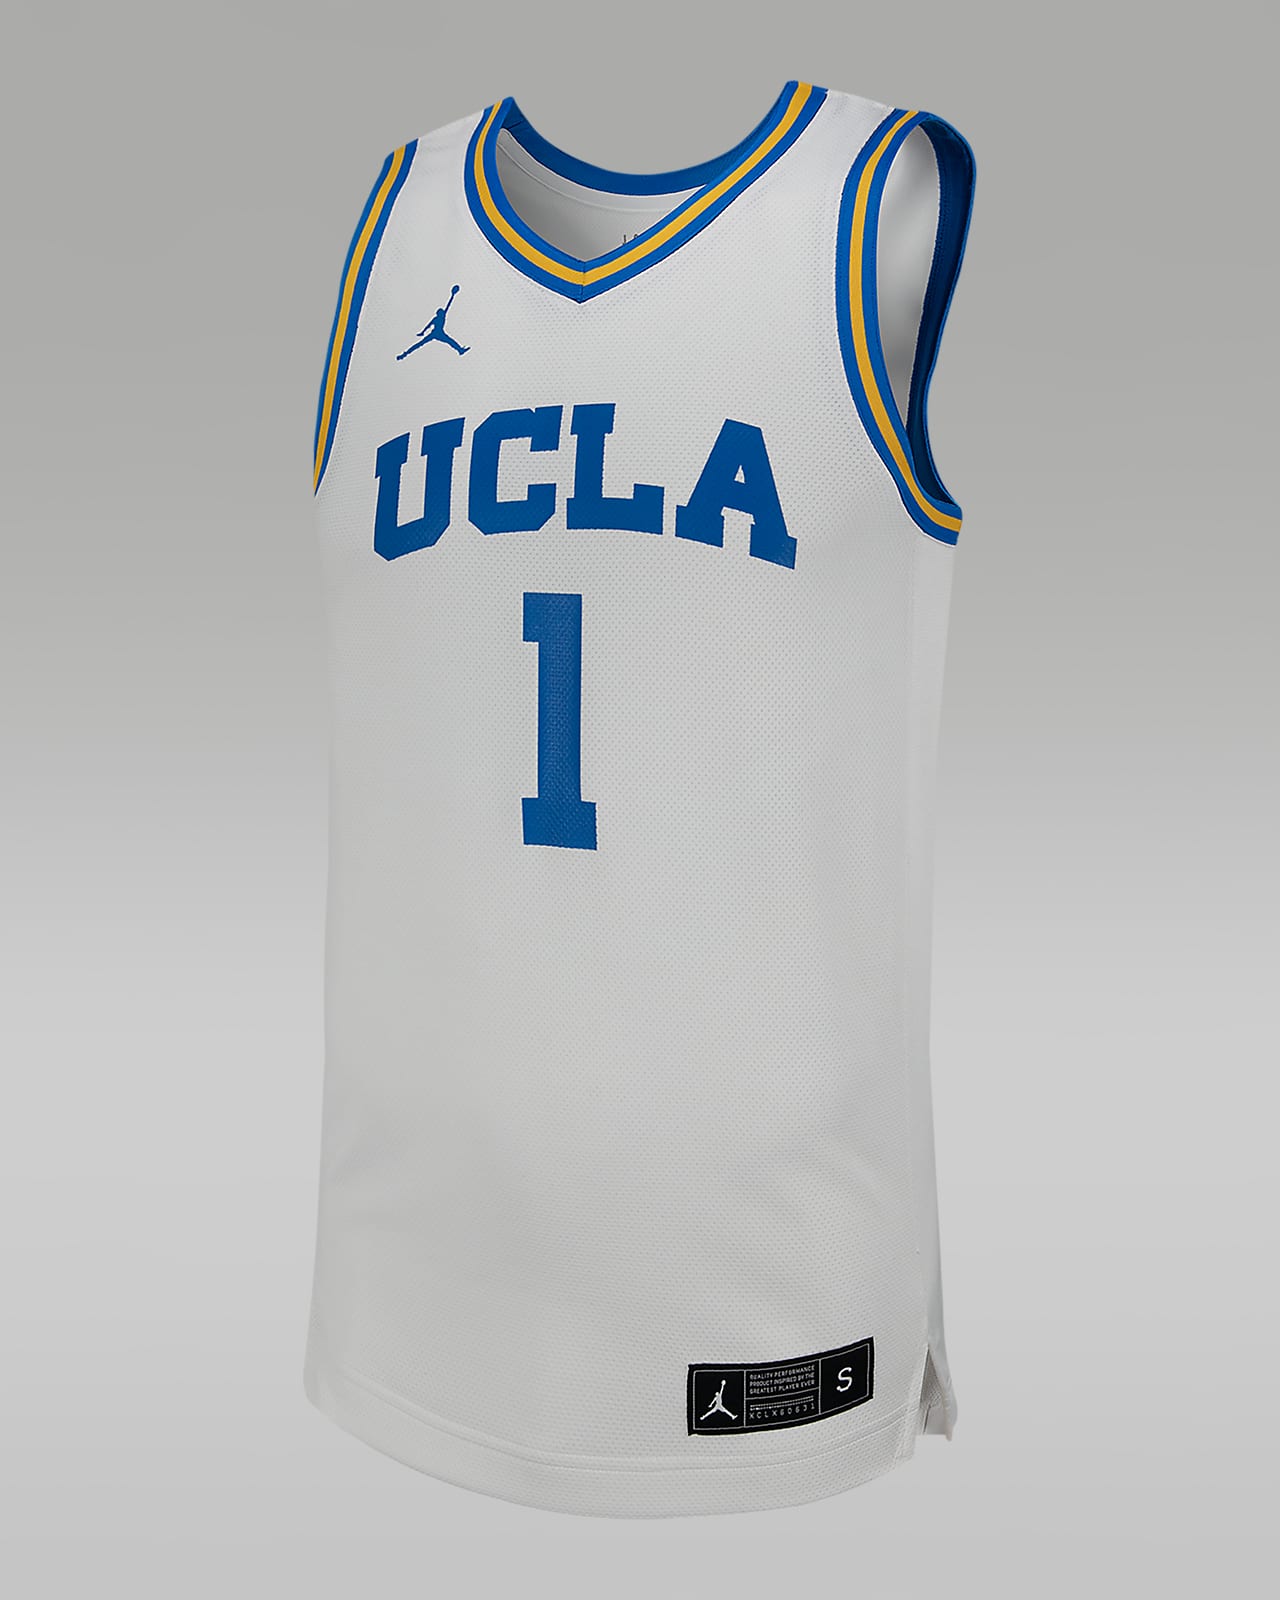 Kiki Rice UCLA Jordan College Basketball Replica Jersey